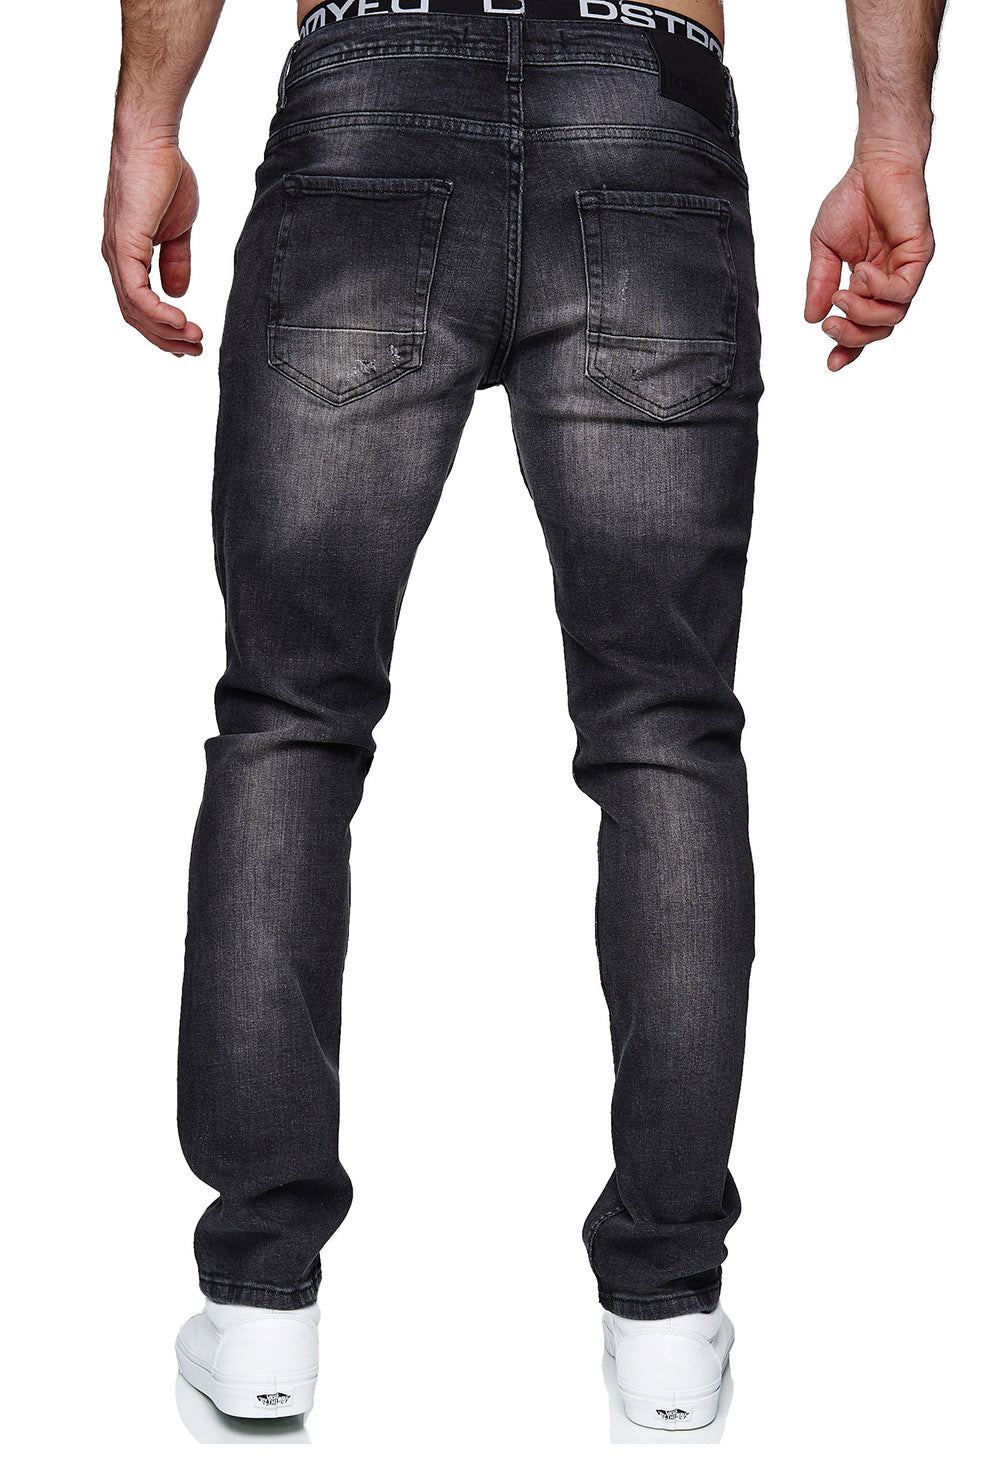 Jeans Slim Fit Jeanshose Stretch Denim Designer Hose 1507-5 Anthrazit-Farbe-Grau_final